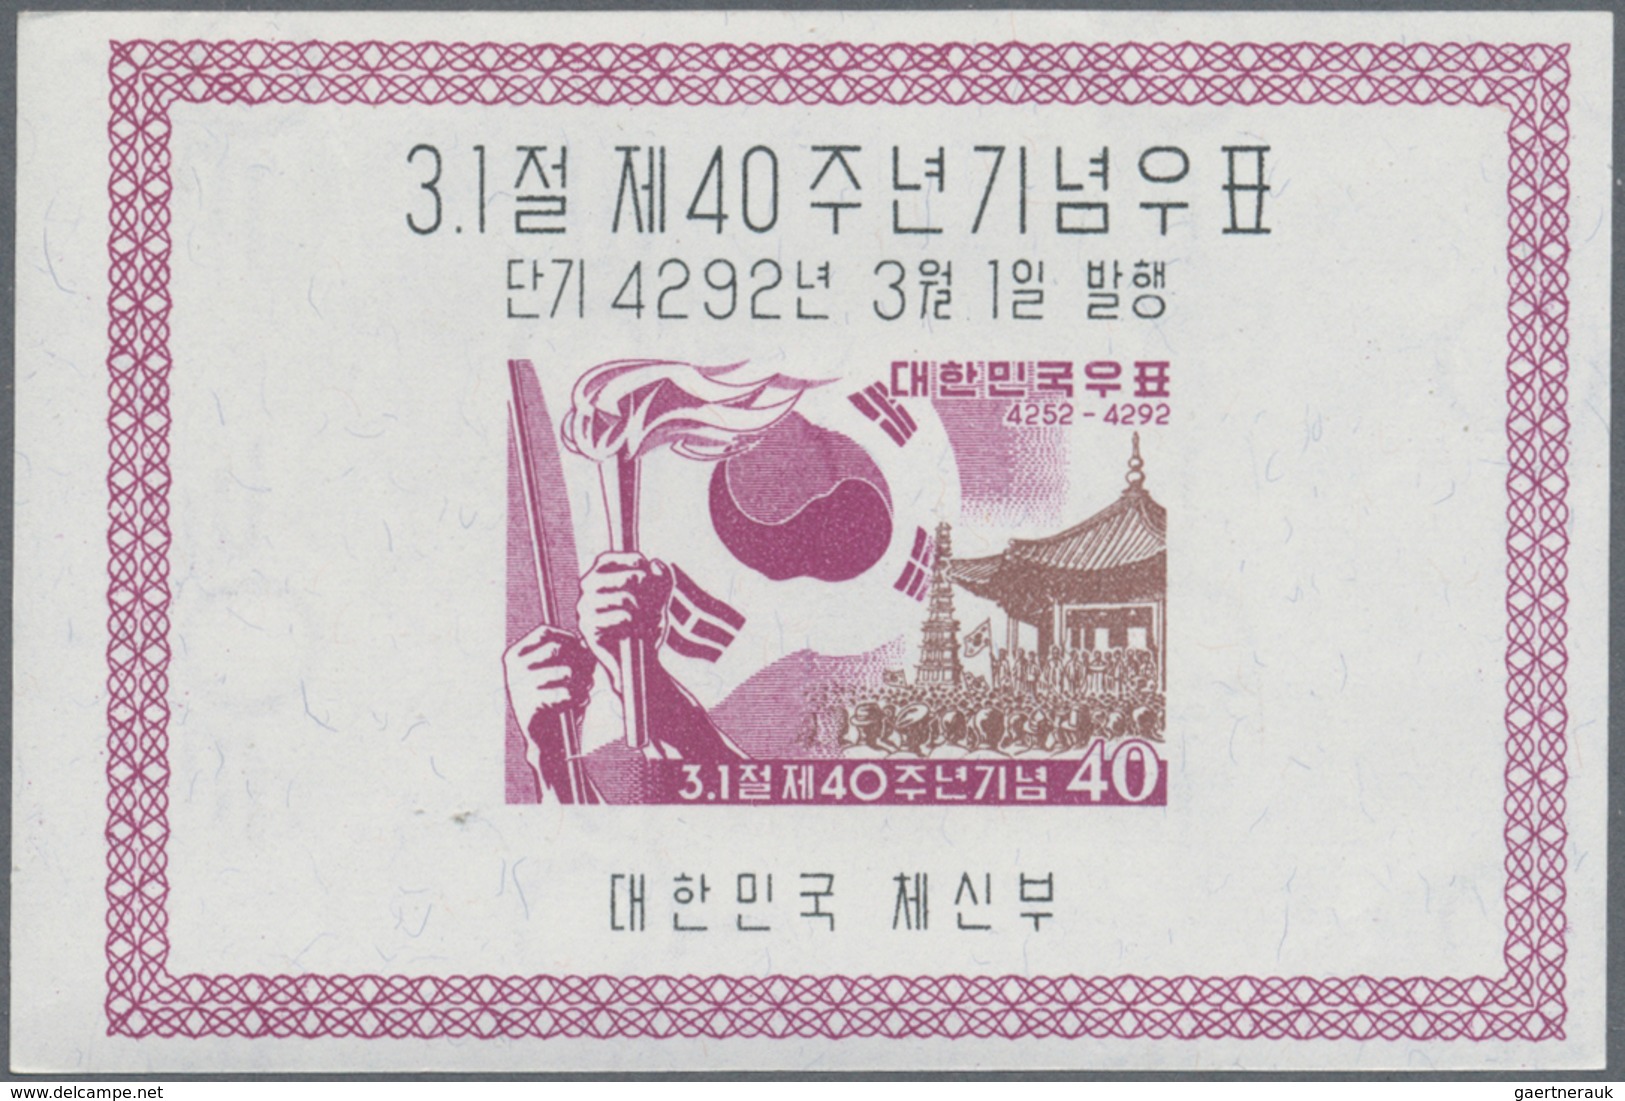 Korea-Süd: 1959, March Uprising Souvenir Sheet, Lot Of 25 Pieces Mint Never Hinged. Michel Block 131 - Korea, South